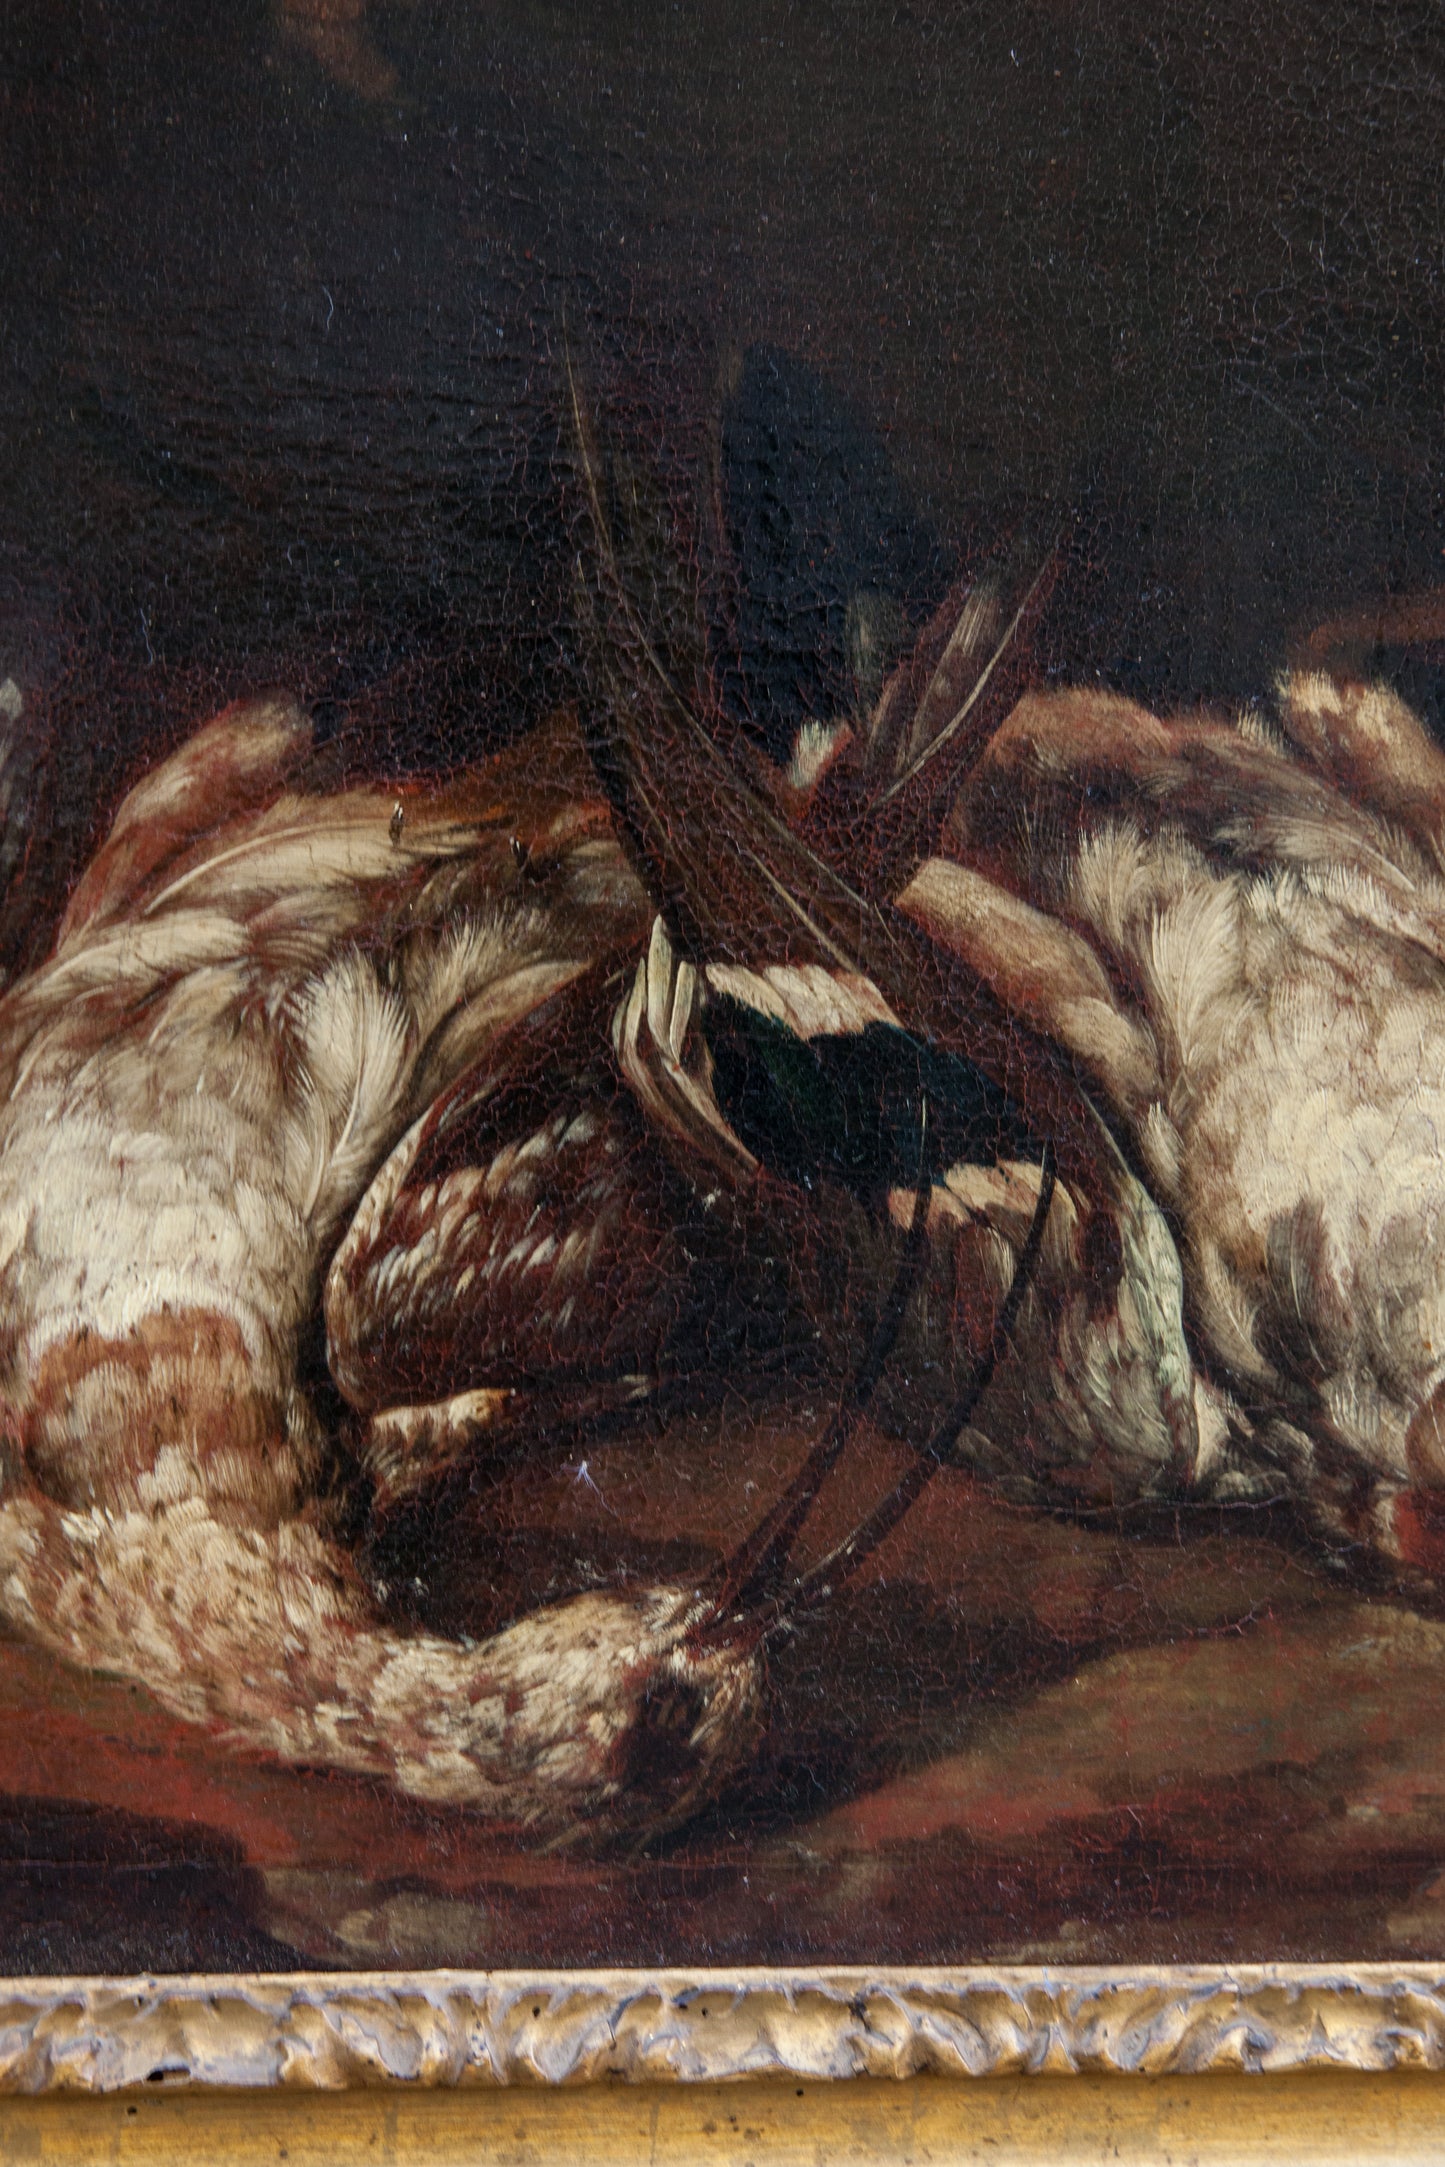 Still Life of Hunting, Monsù Aurora (1610-1677?), attributed